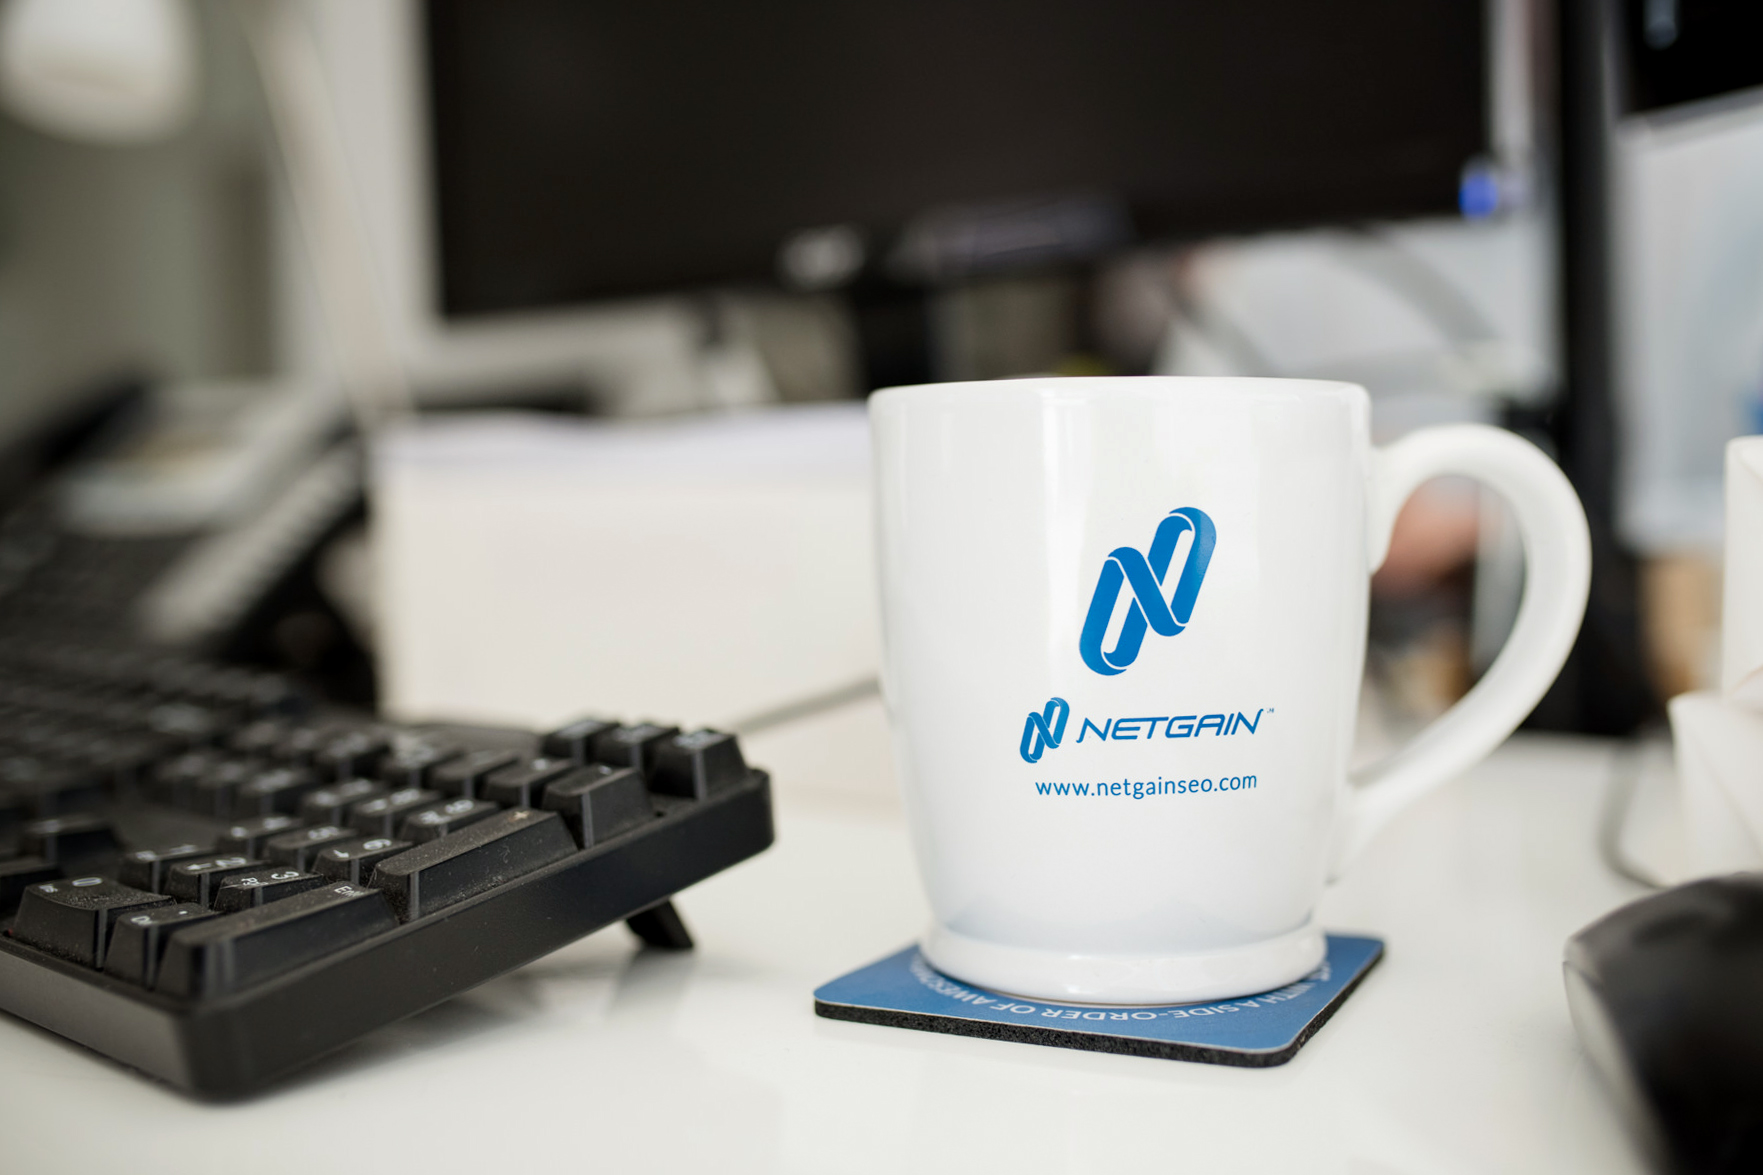 netgain( Digital marketing services) logo cup